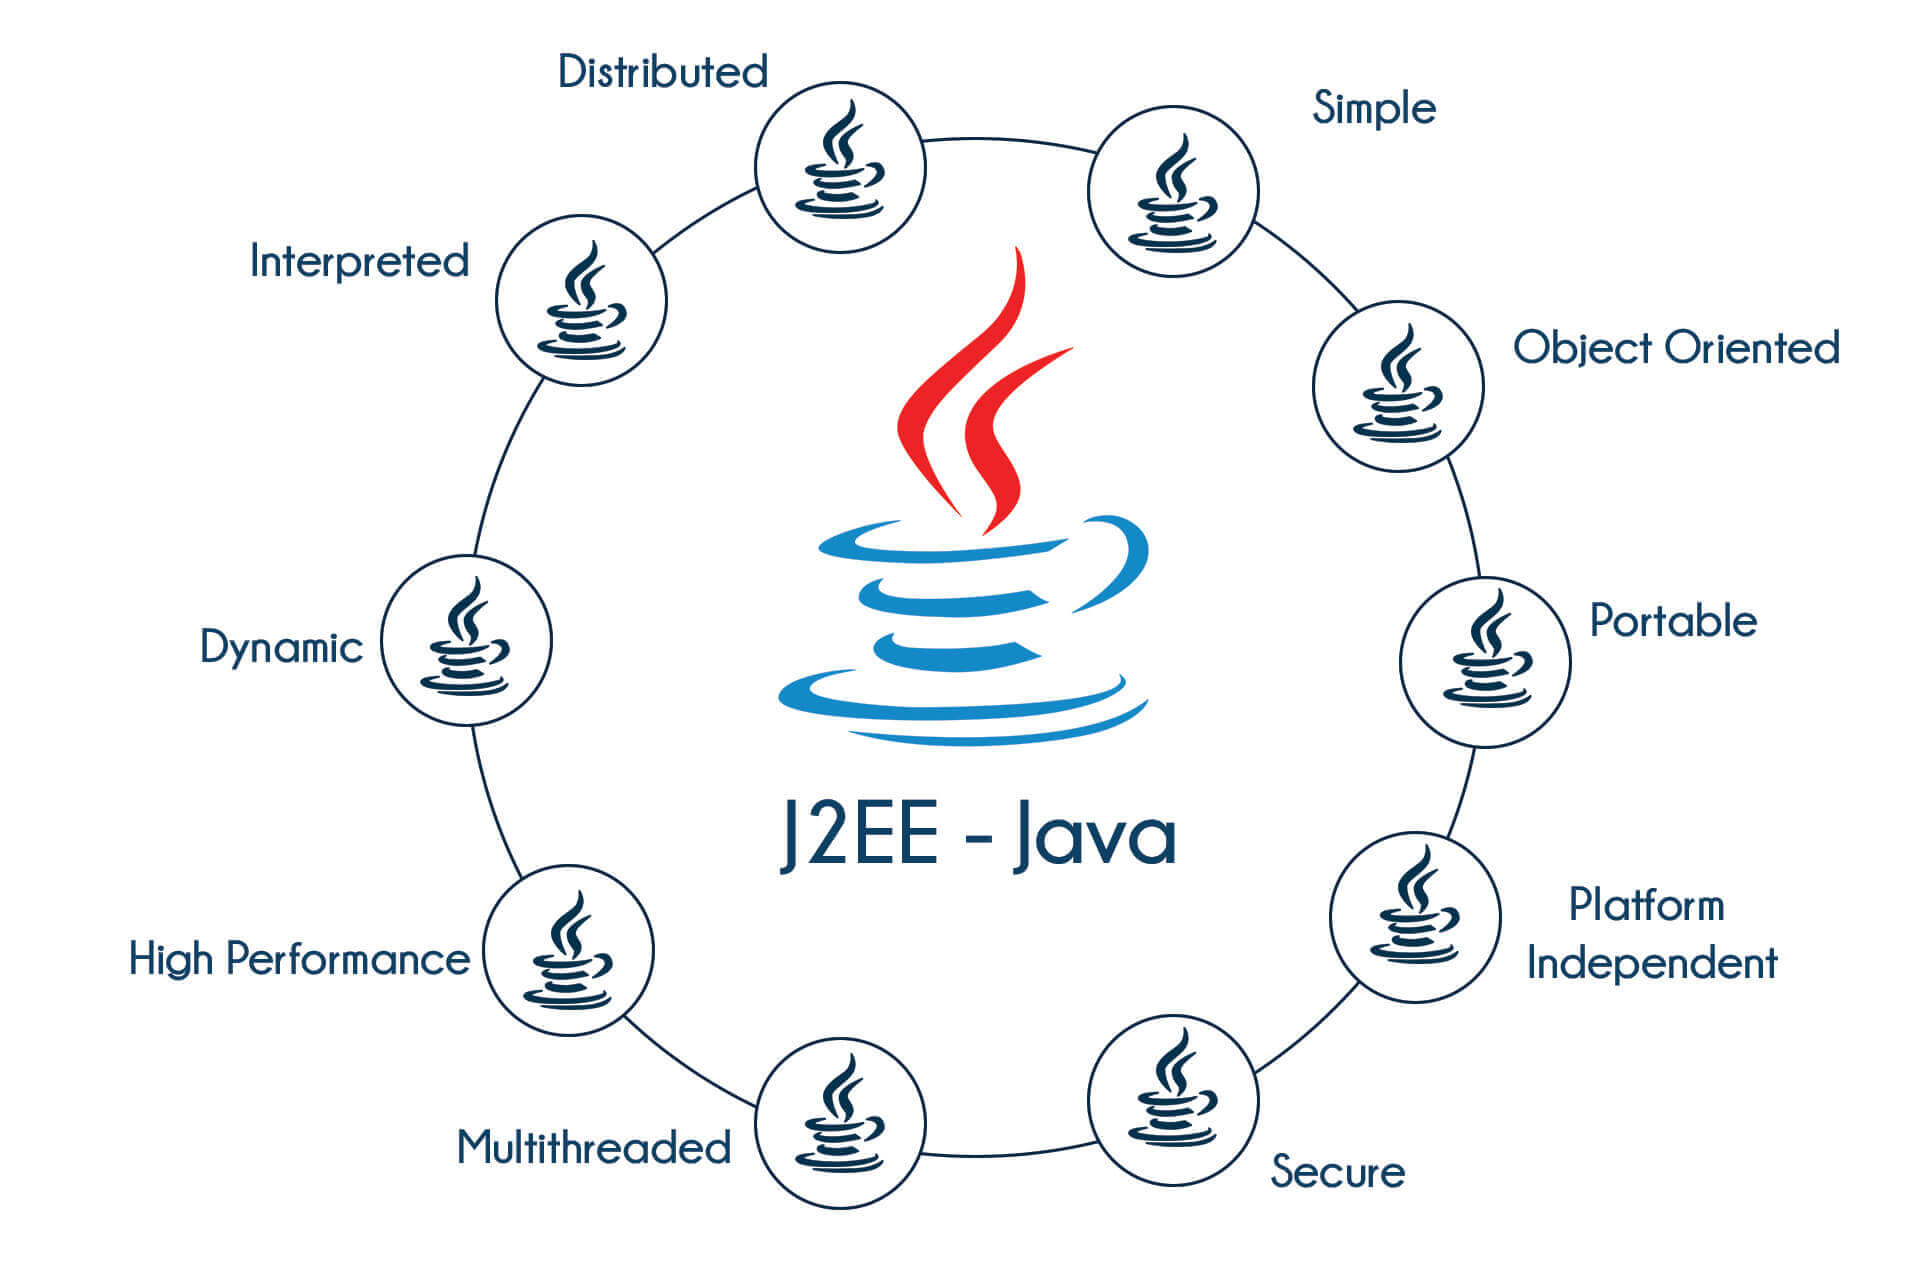 J2EE Training in Bangalore